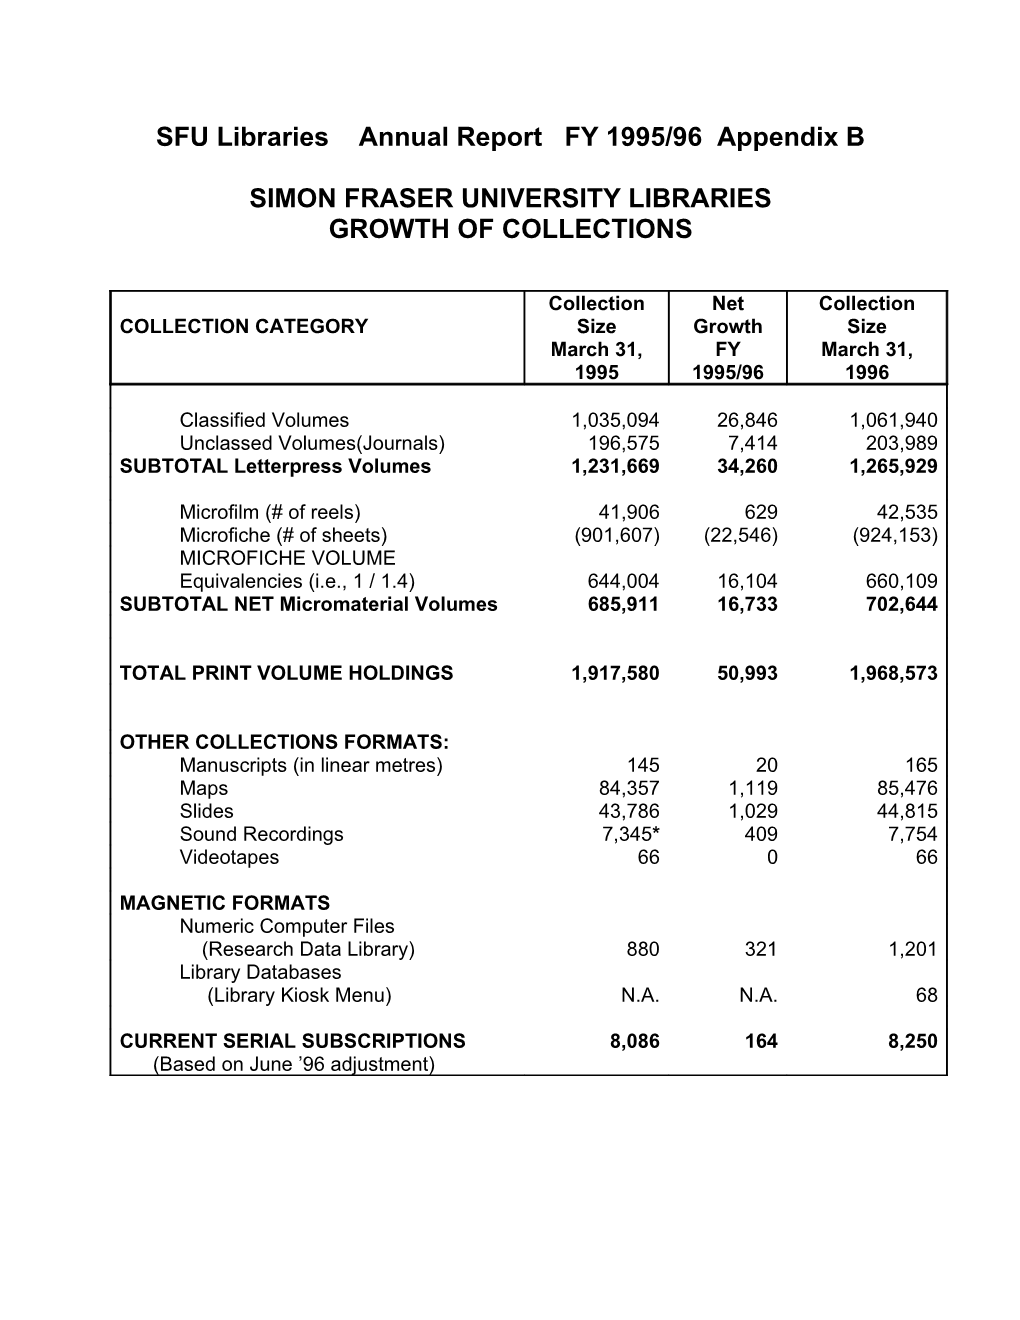 SFU Libraries Annual Report FY 1994/95 Appendix B